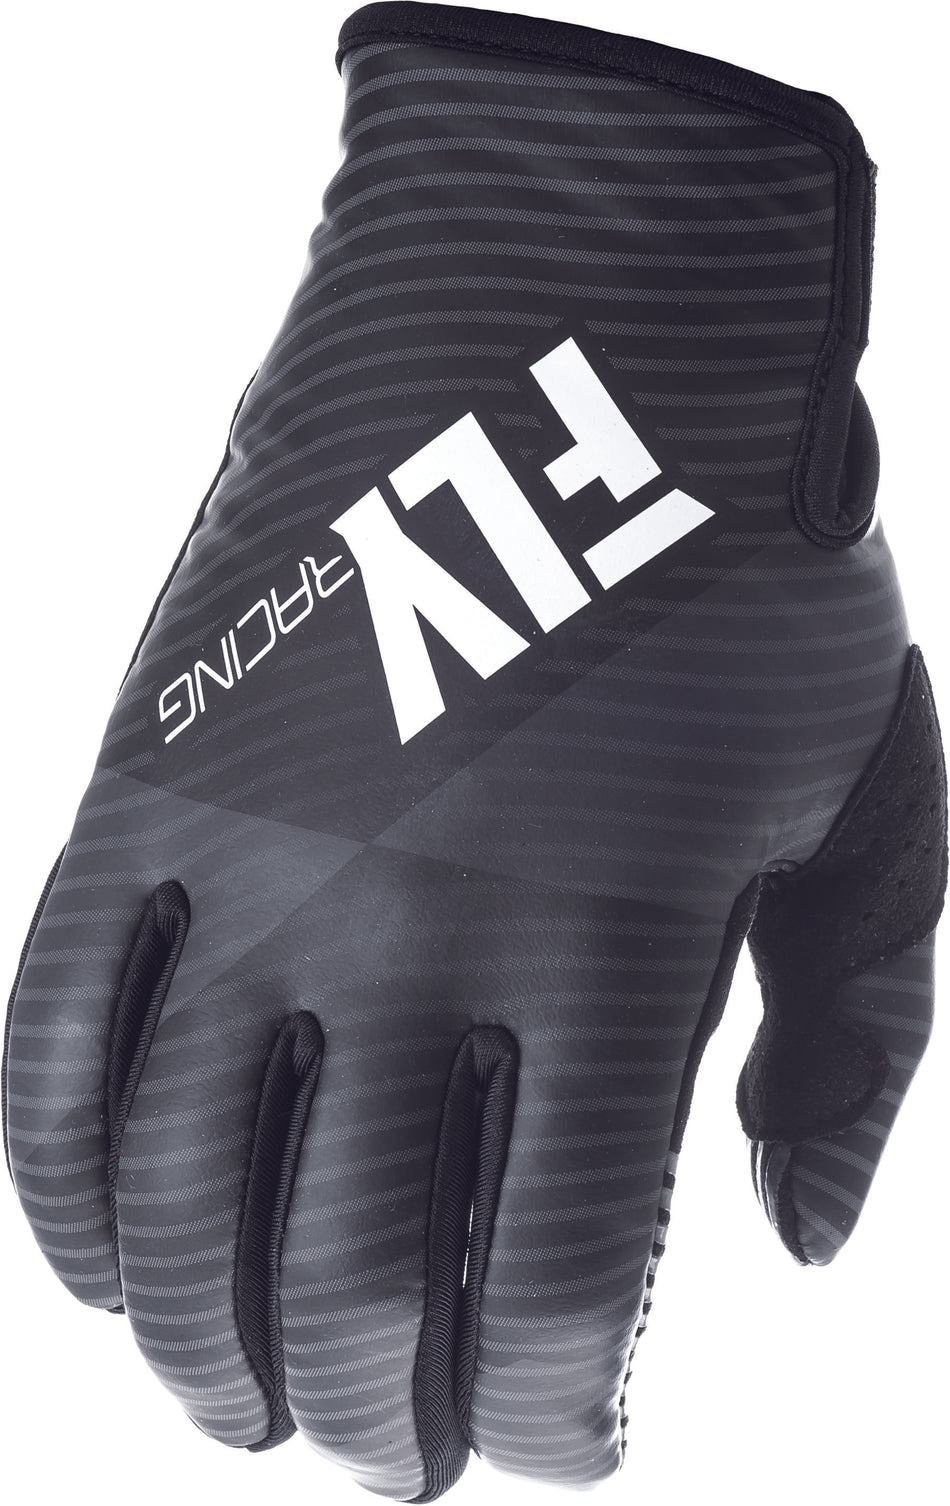 FLY RACING 907 Neoprene Gloves Black/Grey Sz 10 369-64010